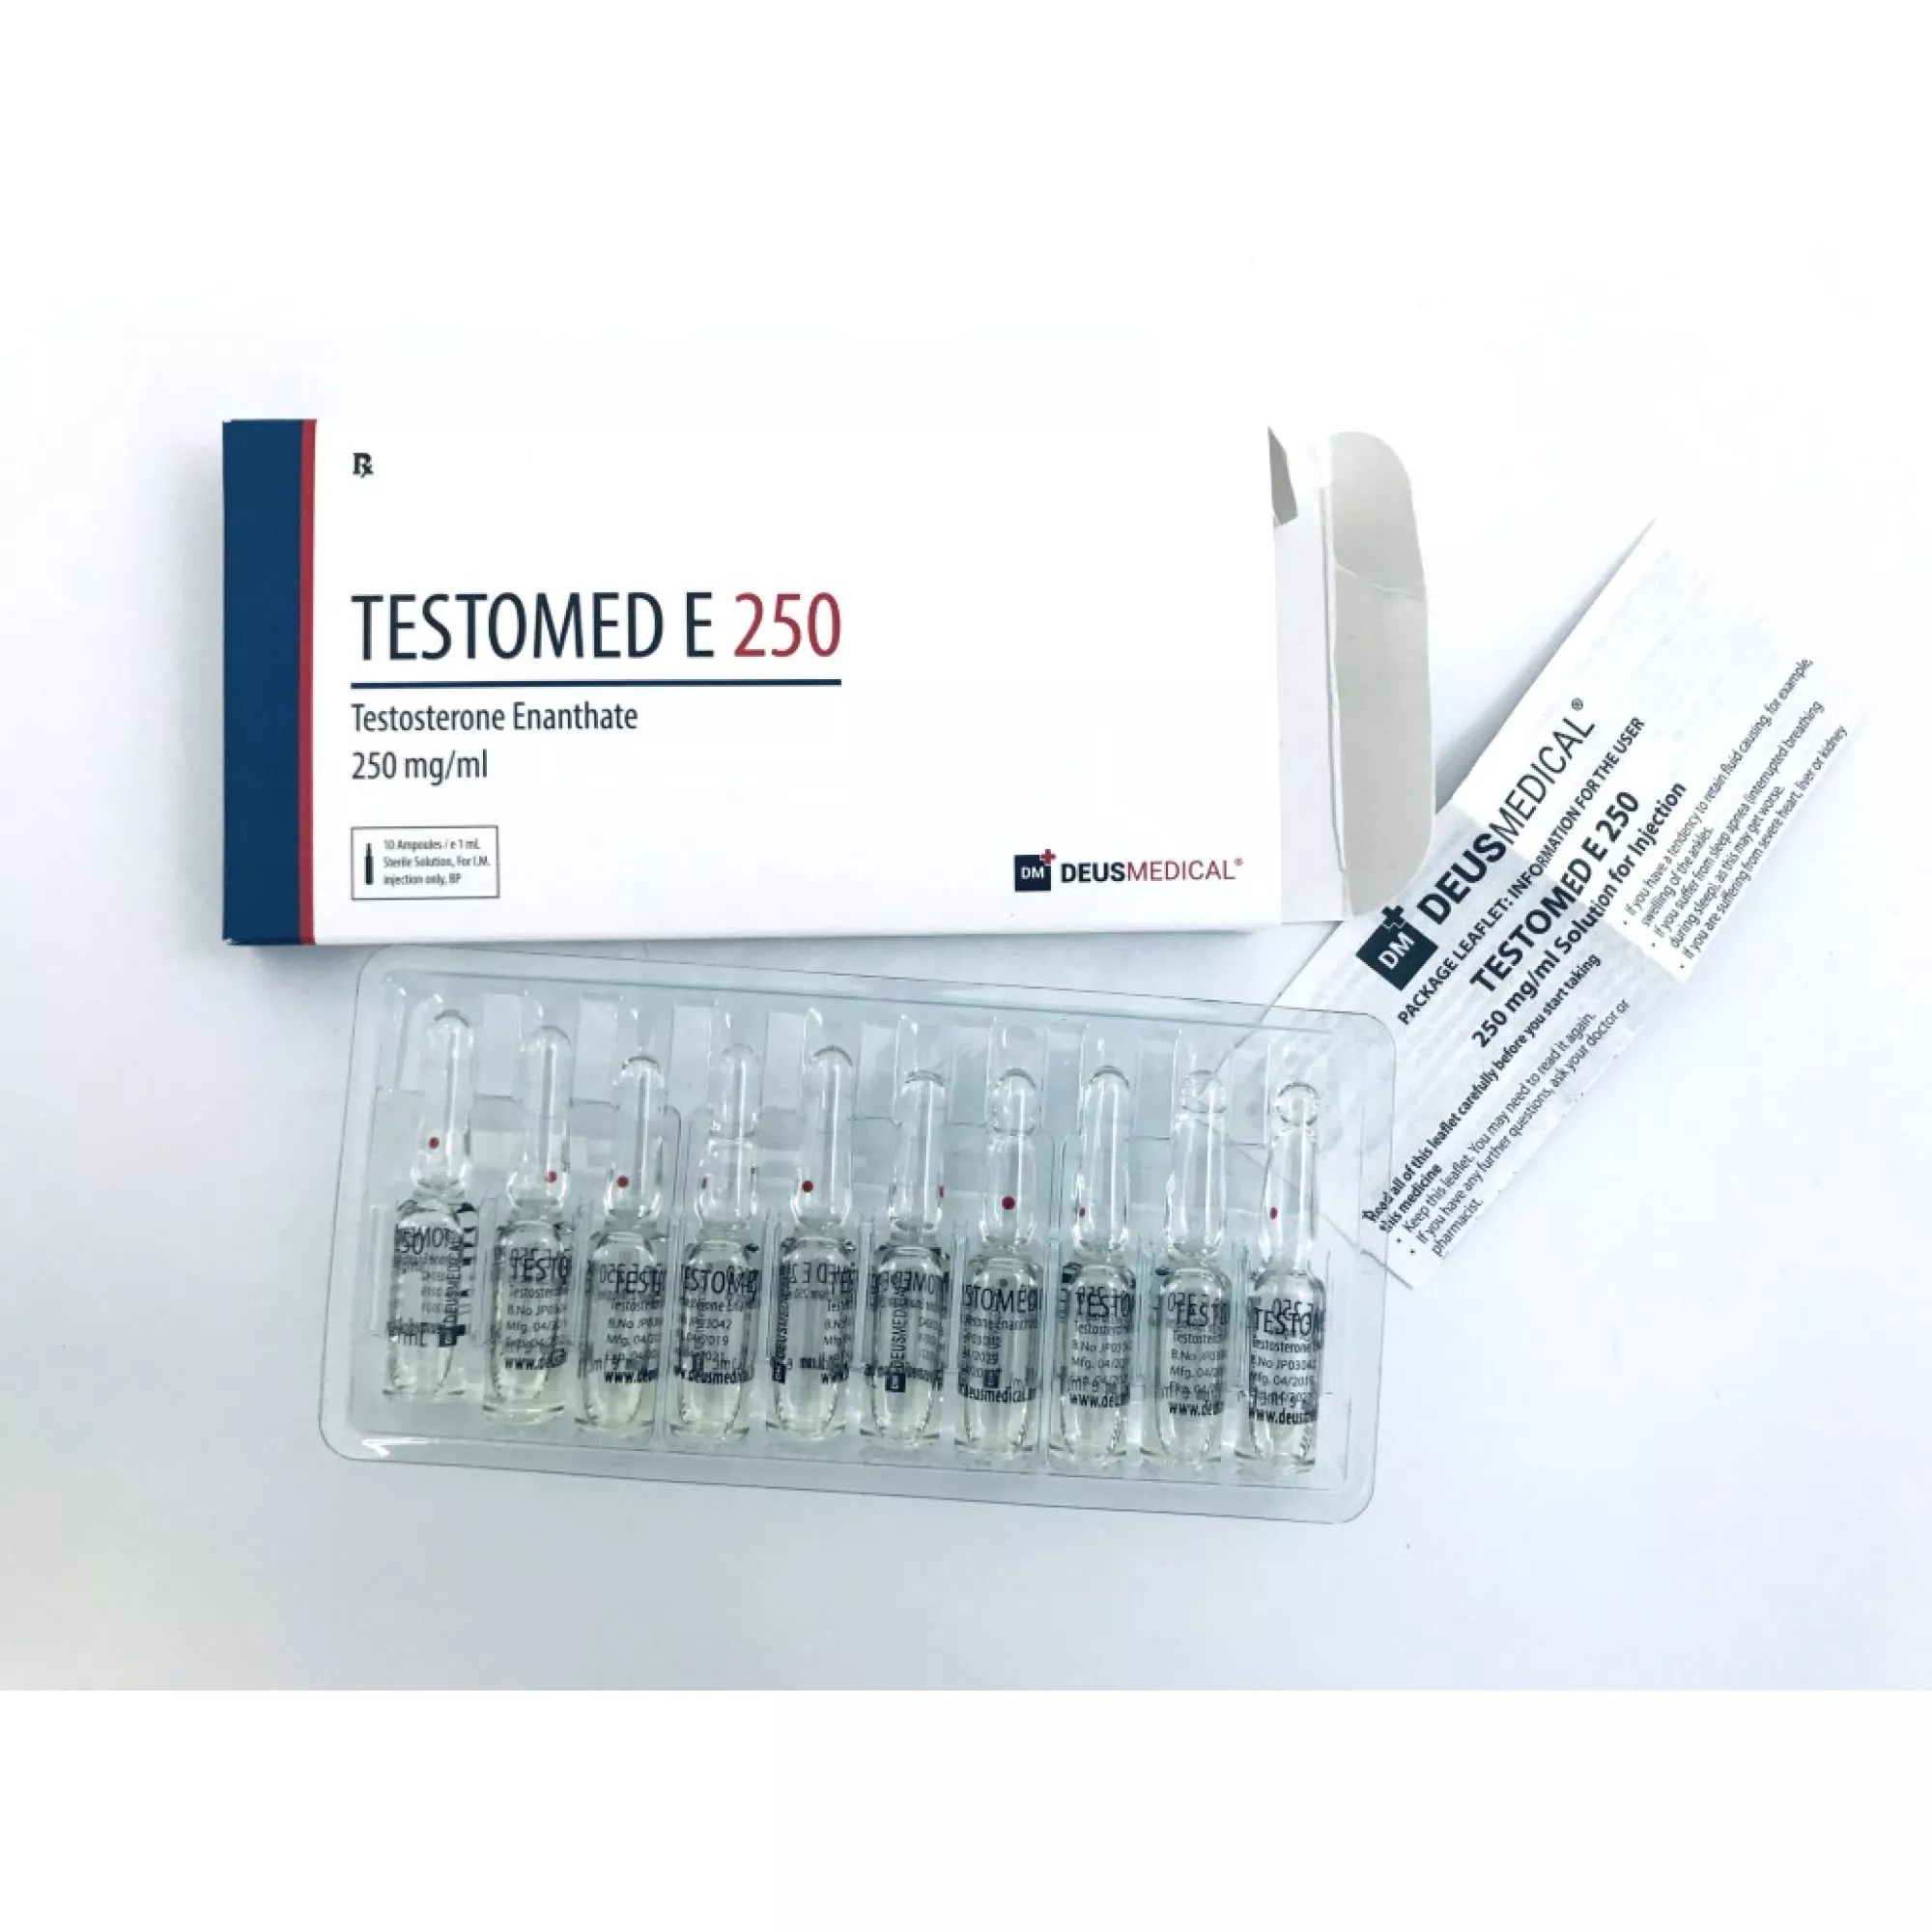 TESTOMED E 250 (Testosterone Enanthate), Deus Medical, Buy Steroids Online - www.deuspower.shop